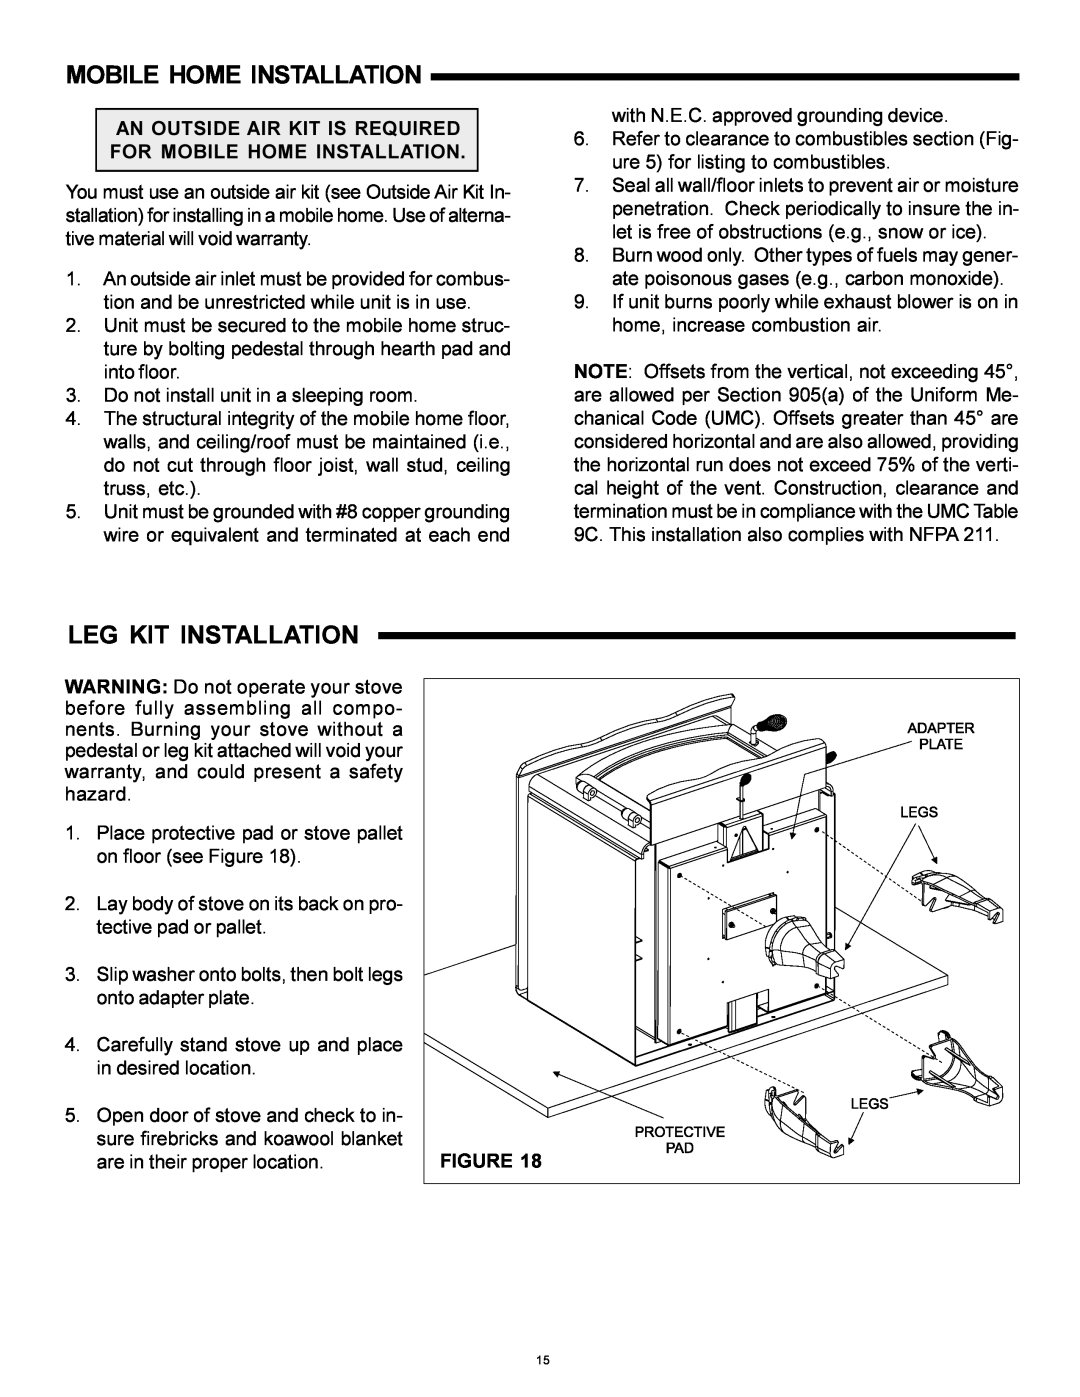 Heat & Glo LifeStyle WS-250, WS-150 installation instructions Mobile Home Installation, Leg Kit Installation 